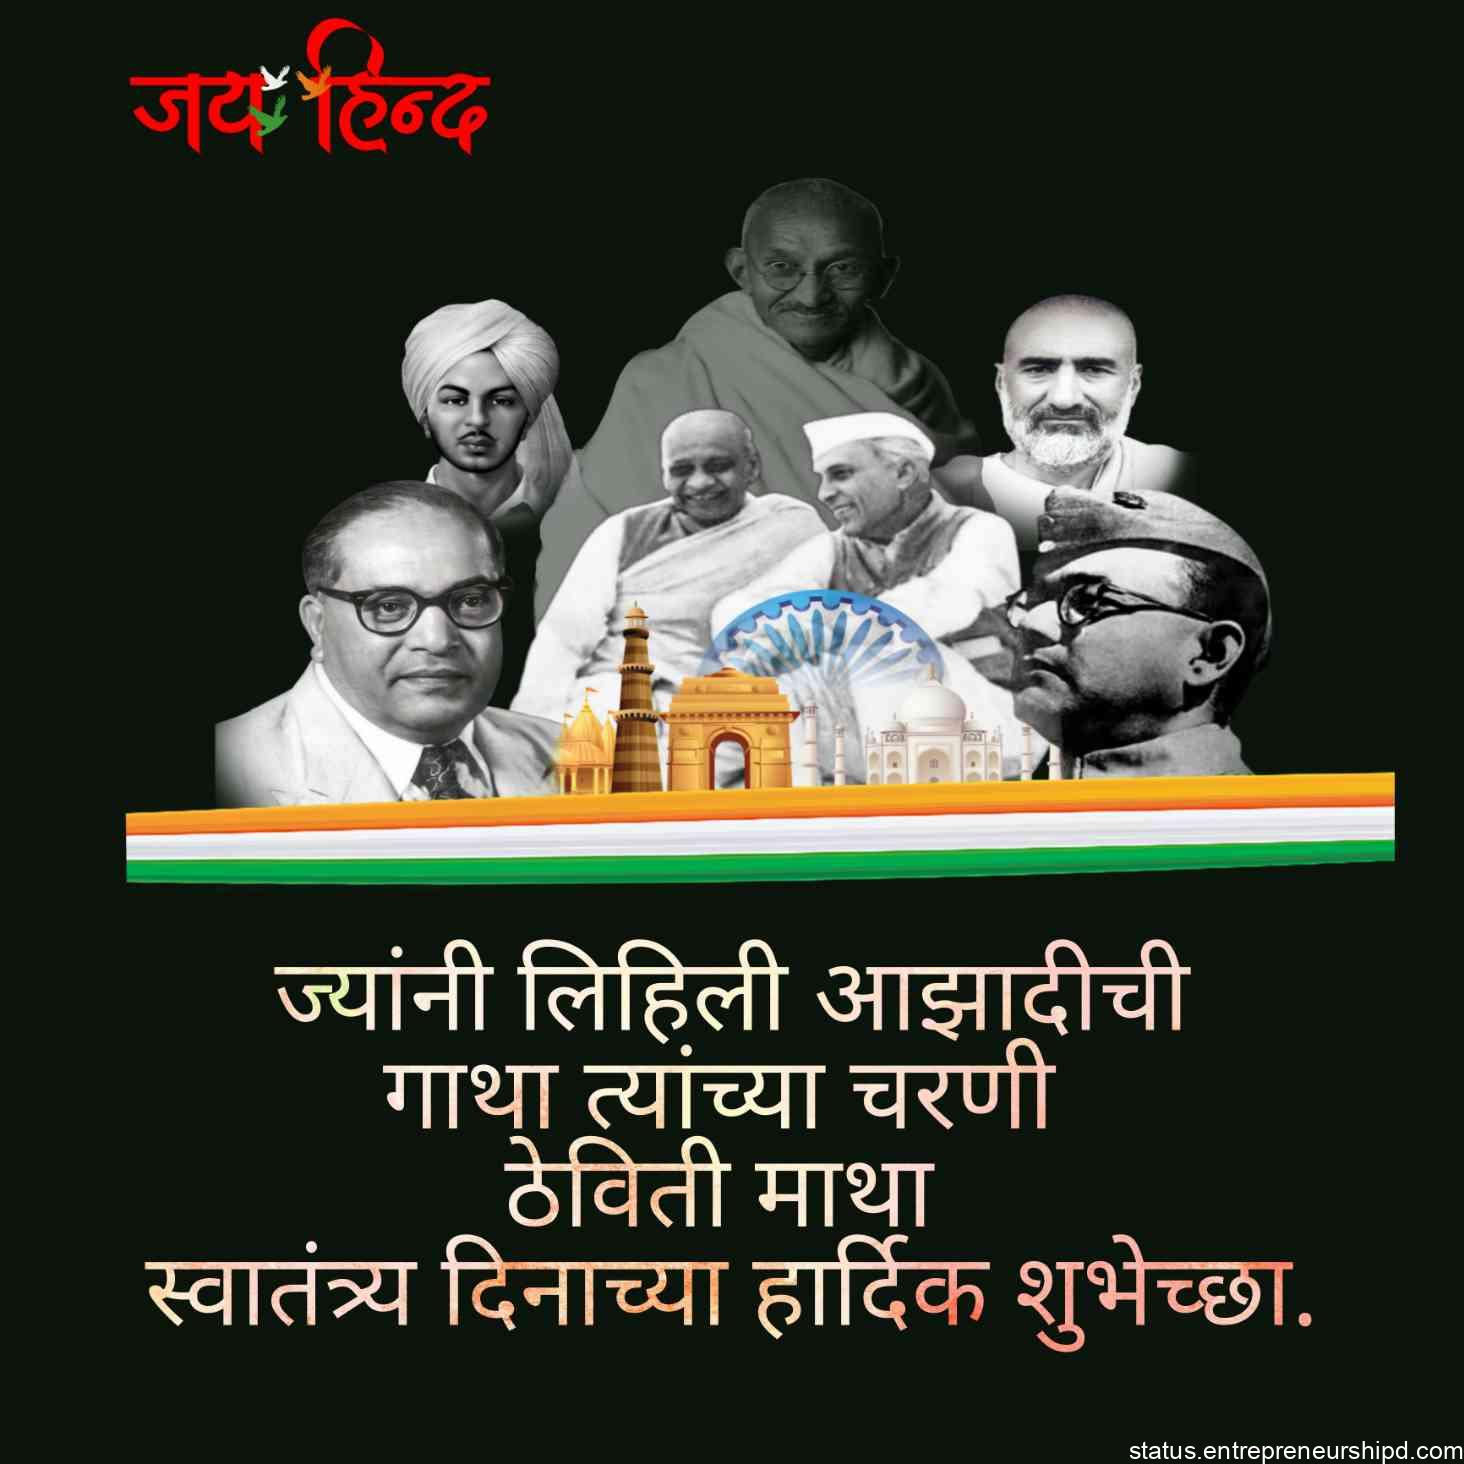 Independent day message Marathi on image